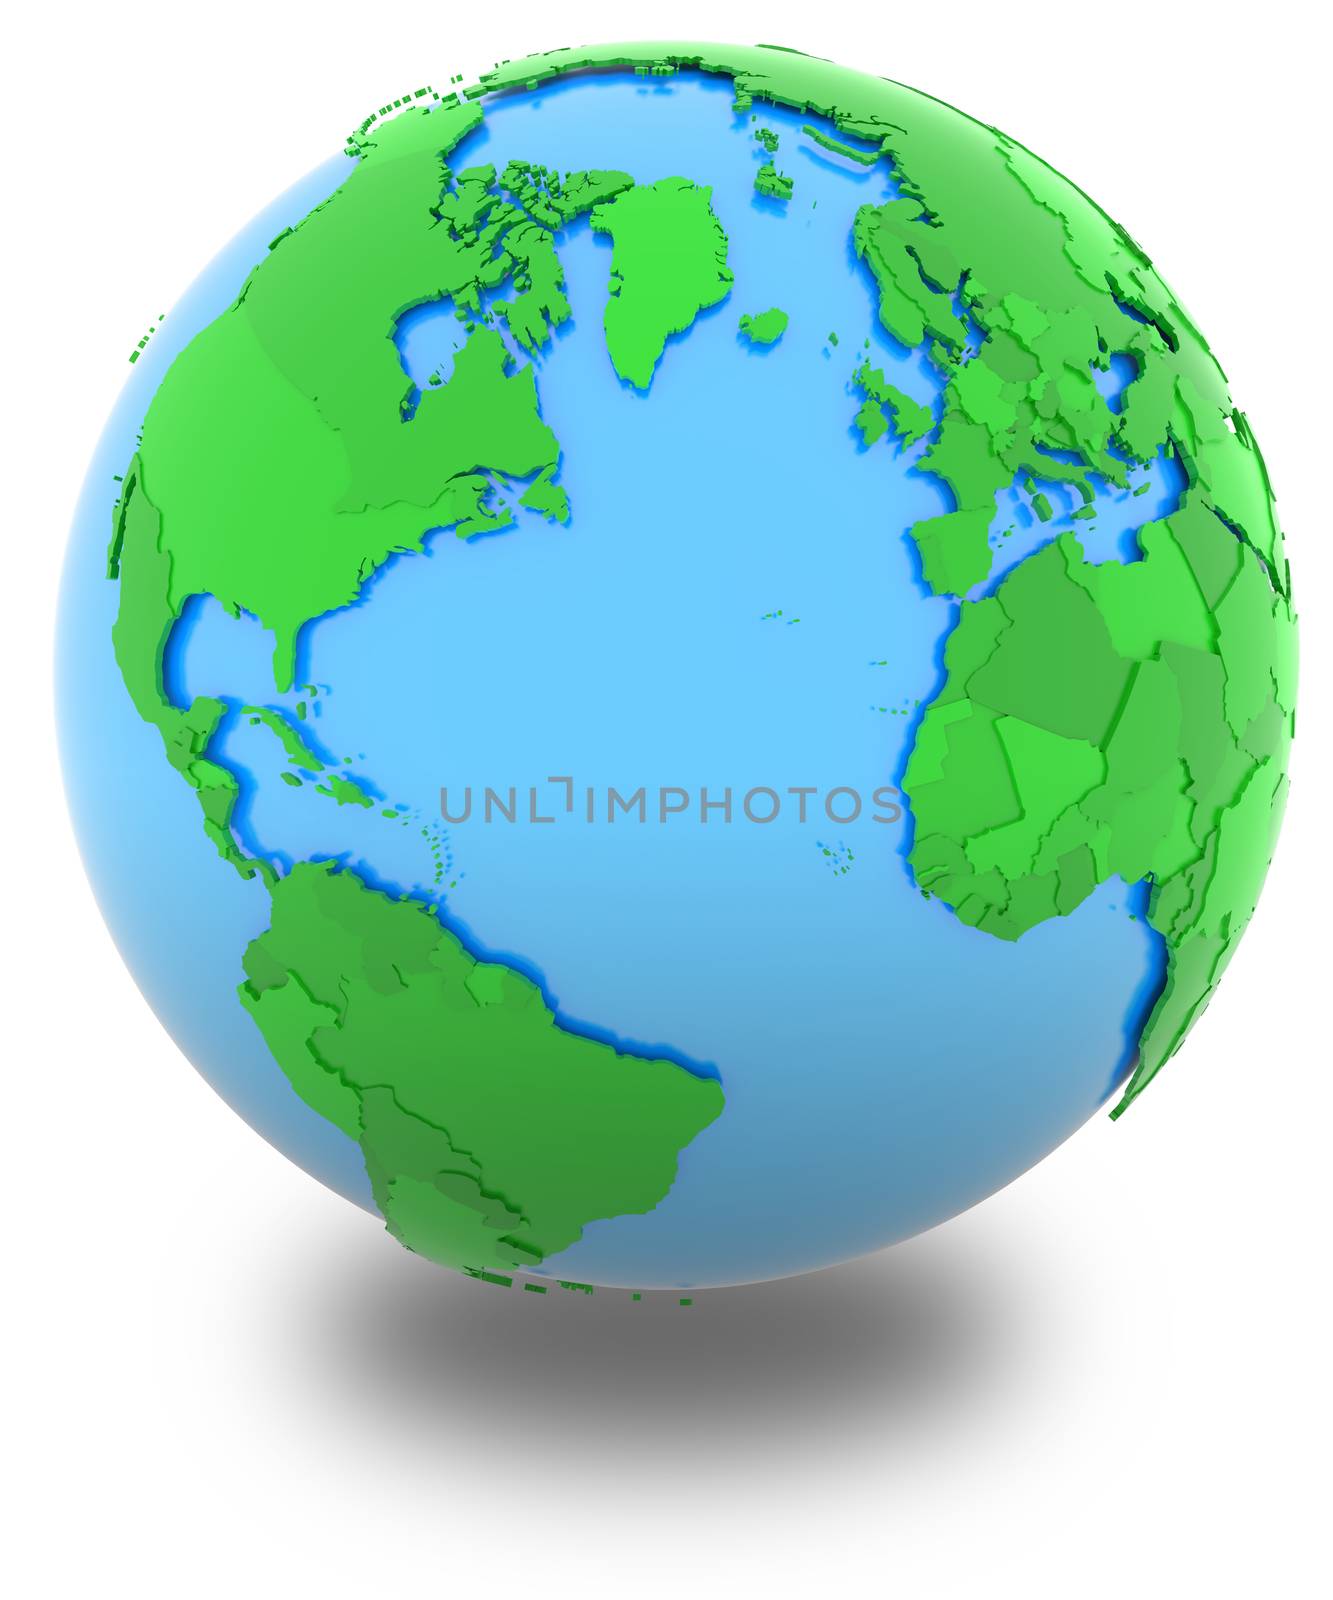 Western hemisphere on the globe by Harvepino